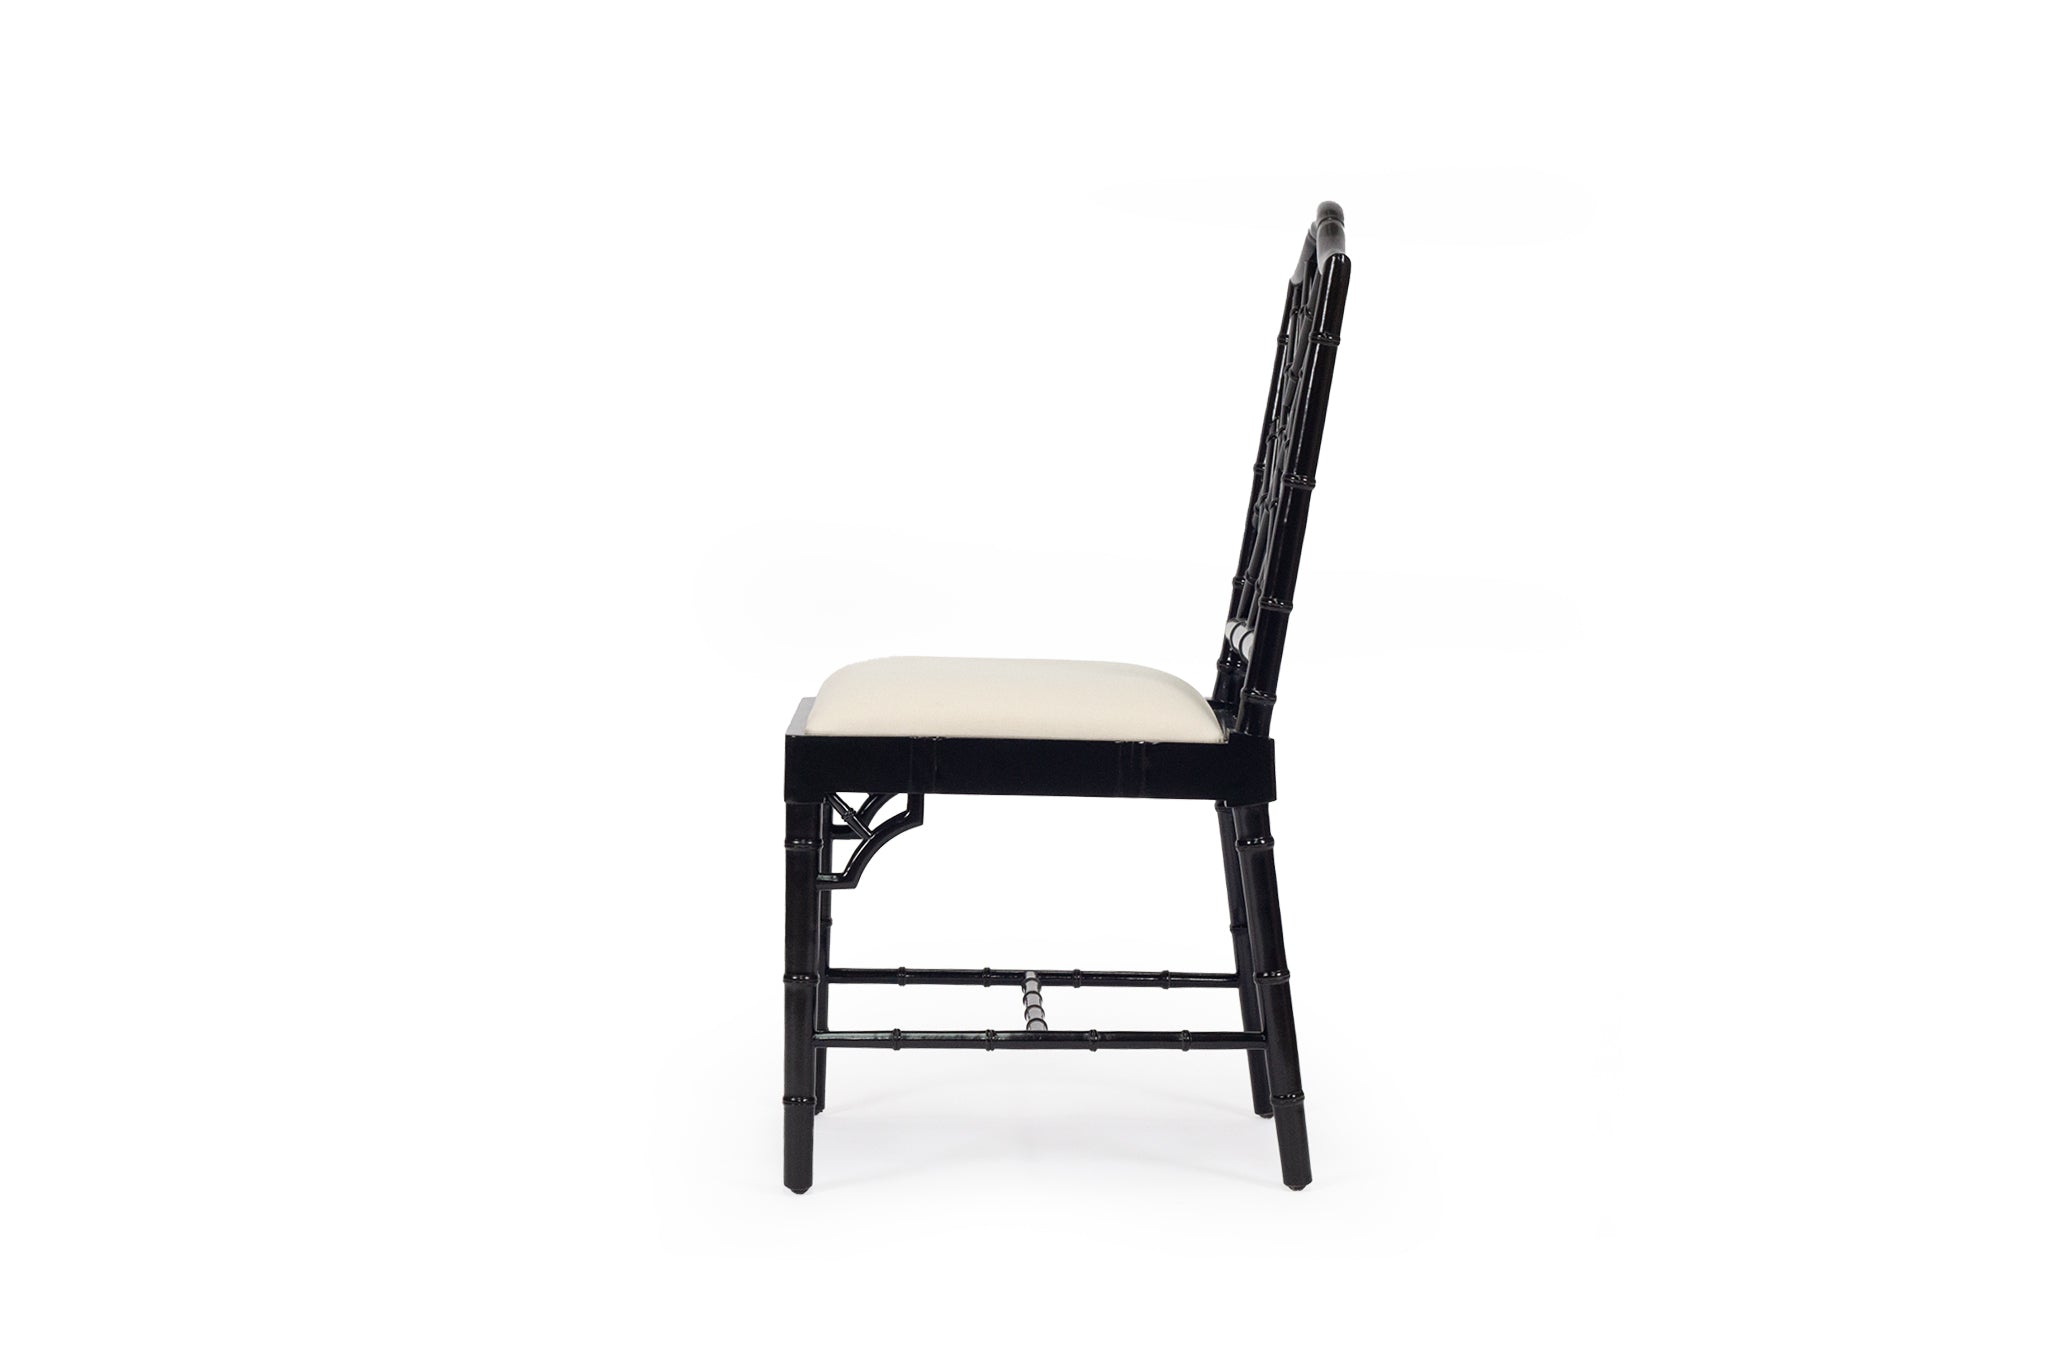 Thomas Mahogany Dining Chair – Black